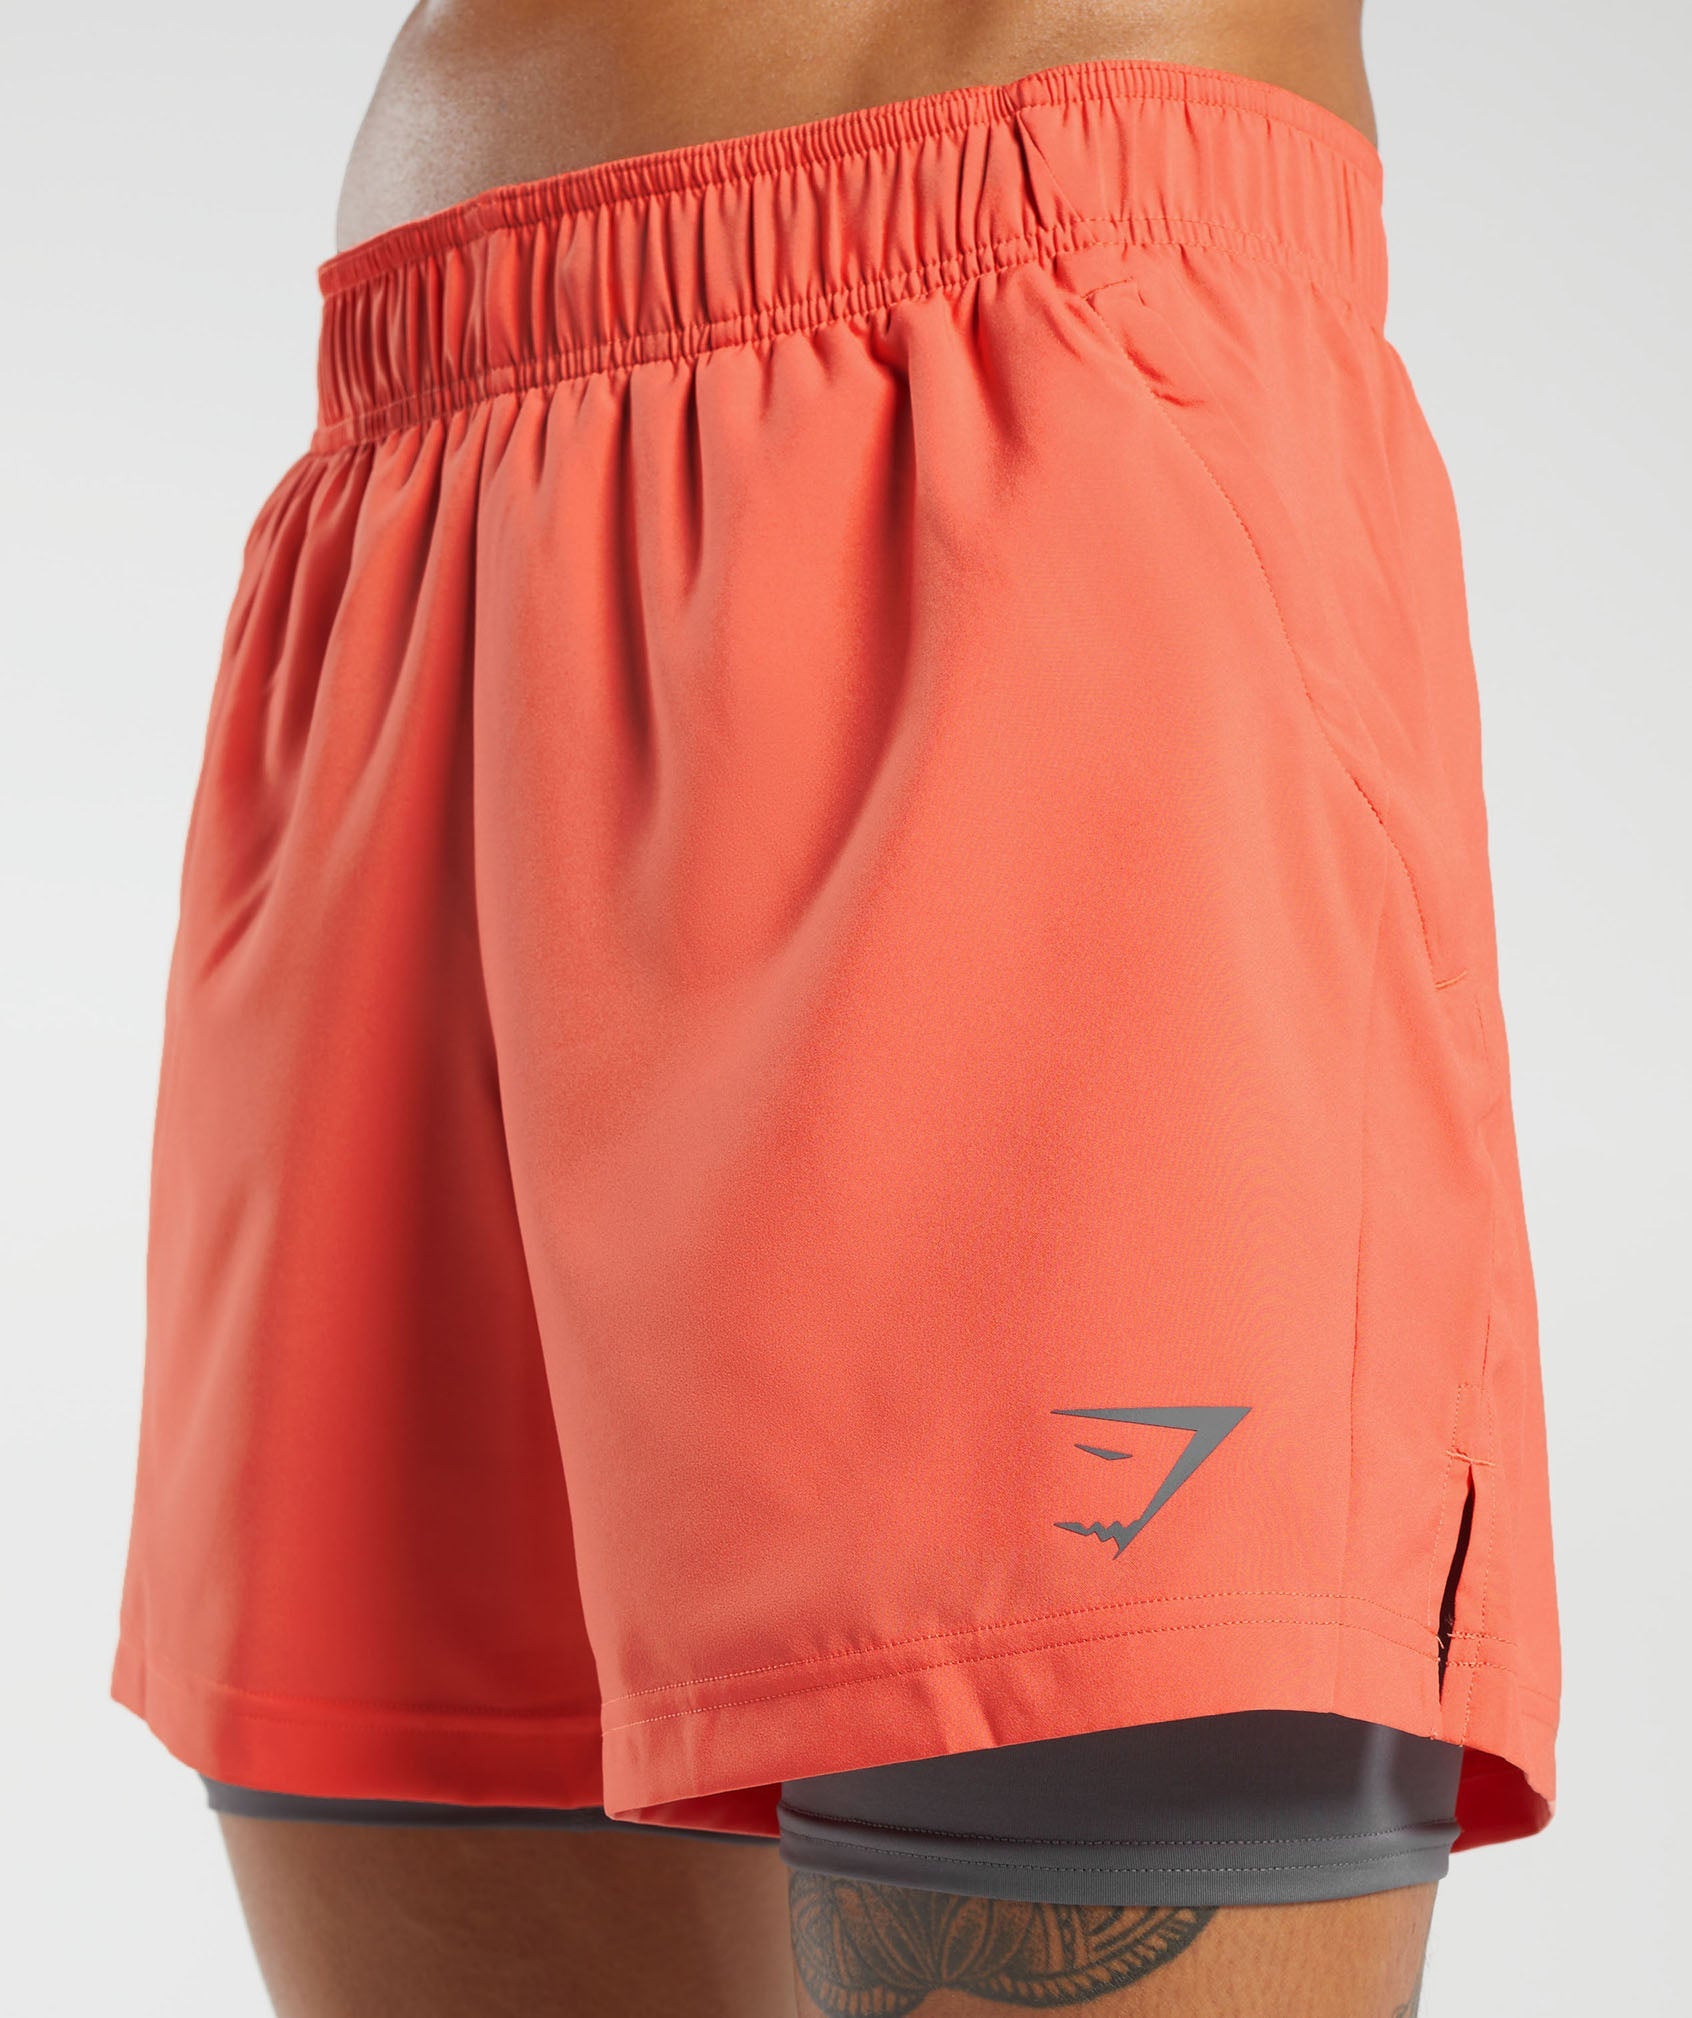 Sport 5" 2 in 1 Shorts in Aerospace Orange/Silhouette Grey - view 5